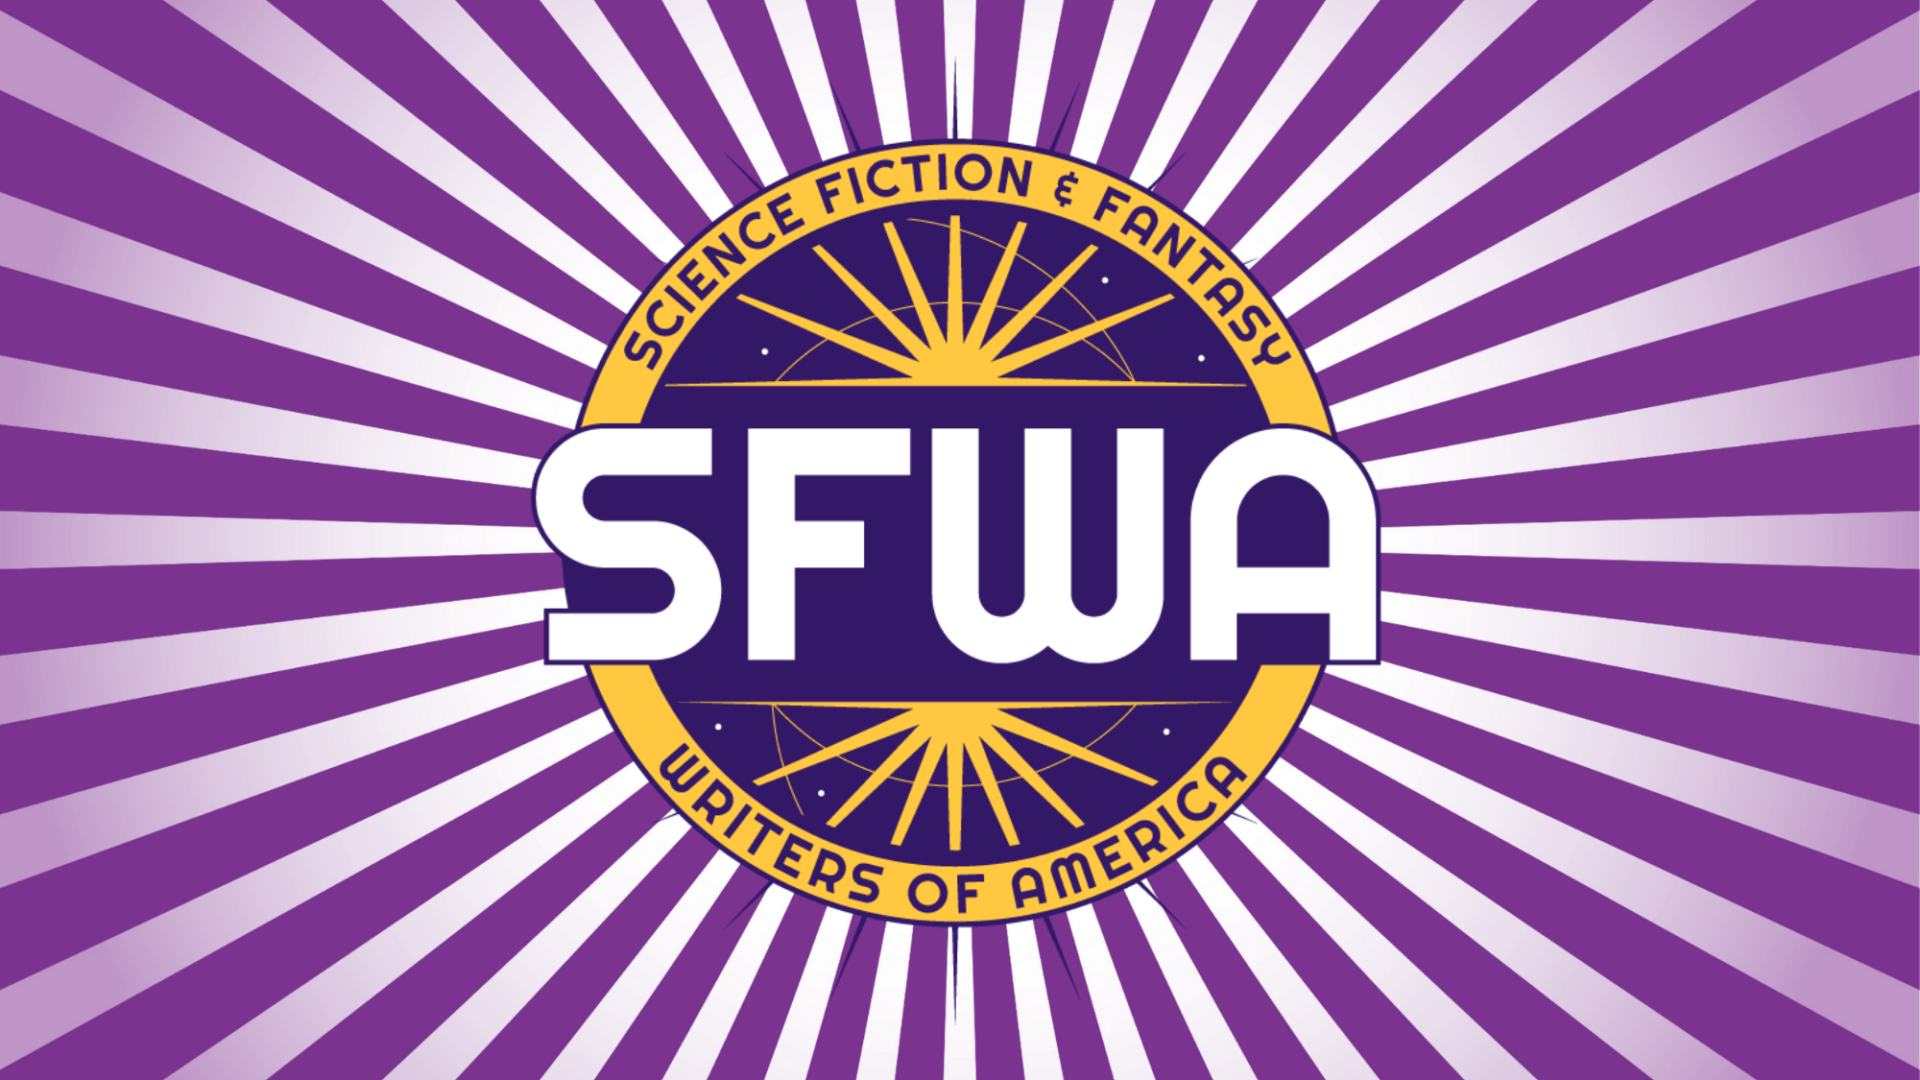 Press Release: Christina Bauer Named Full Member to SFWA